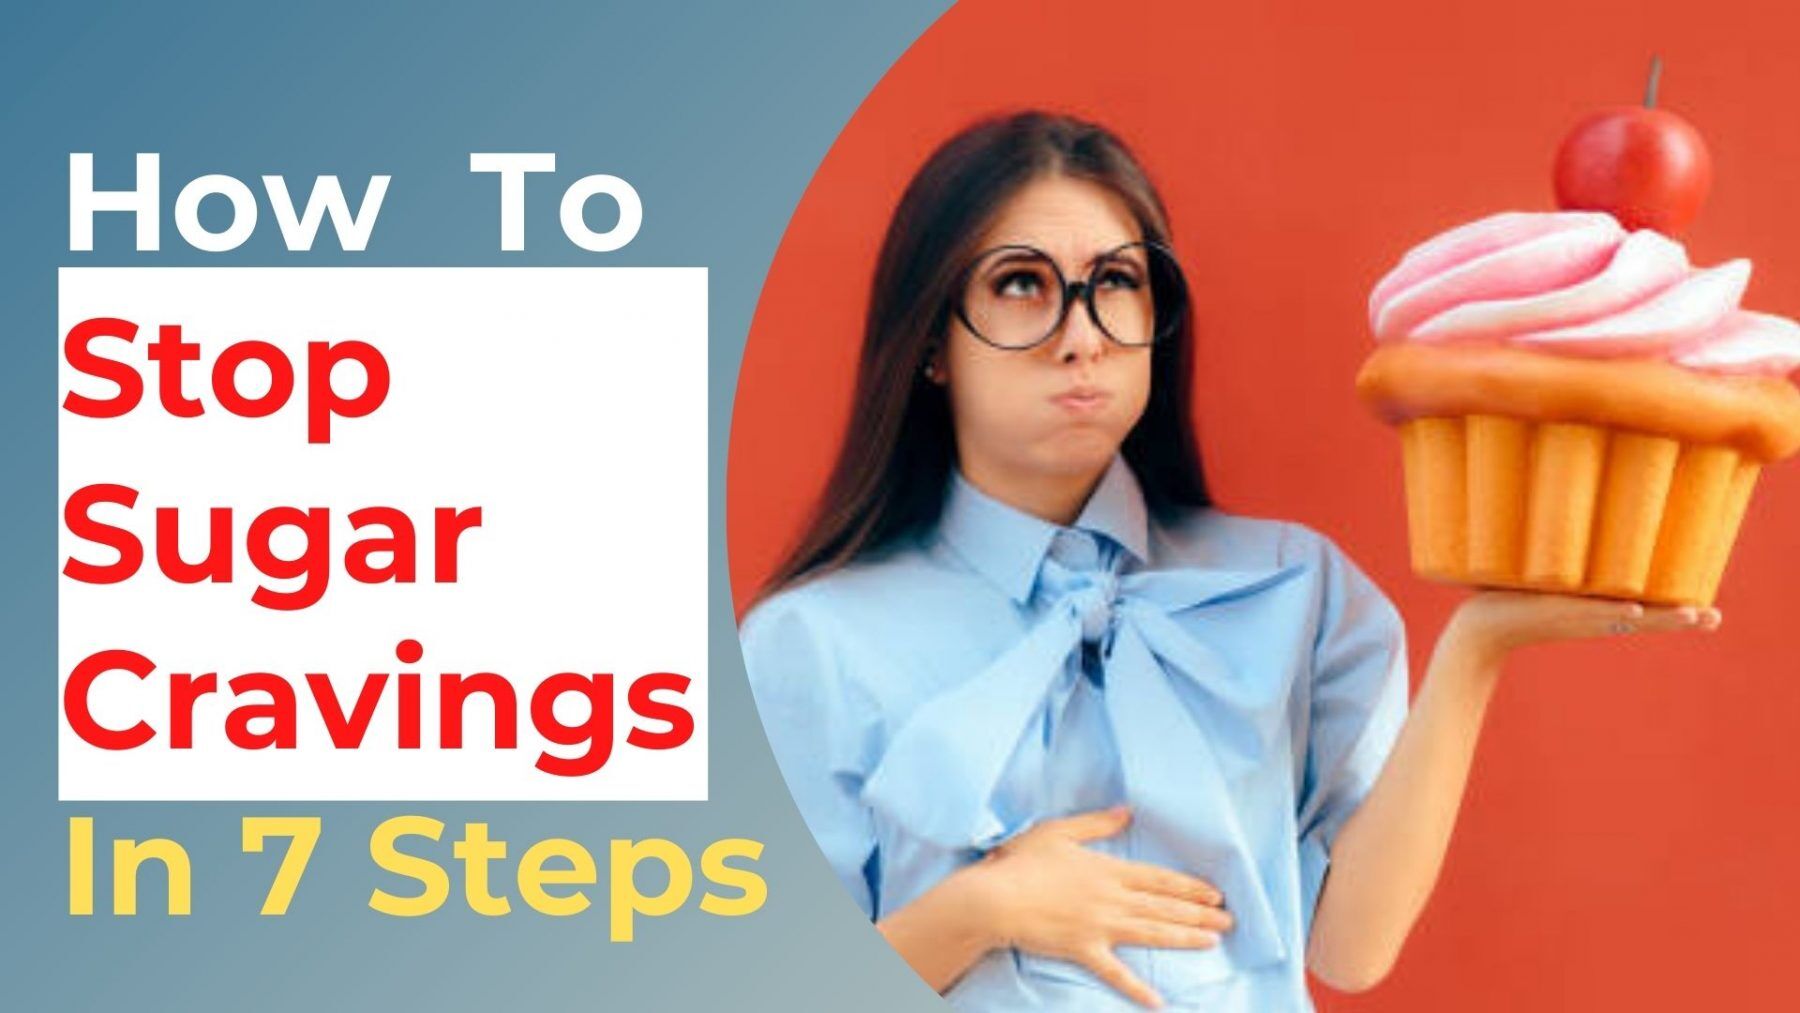 How to Stop Sugar Cravings in 7 Steps